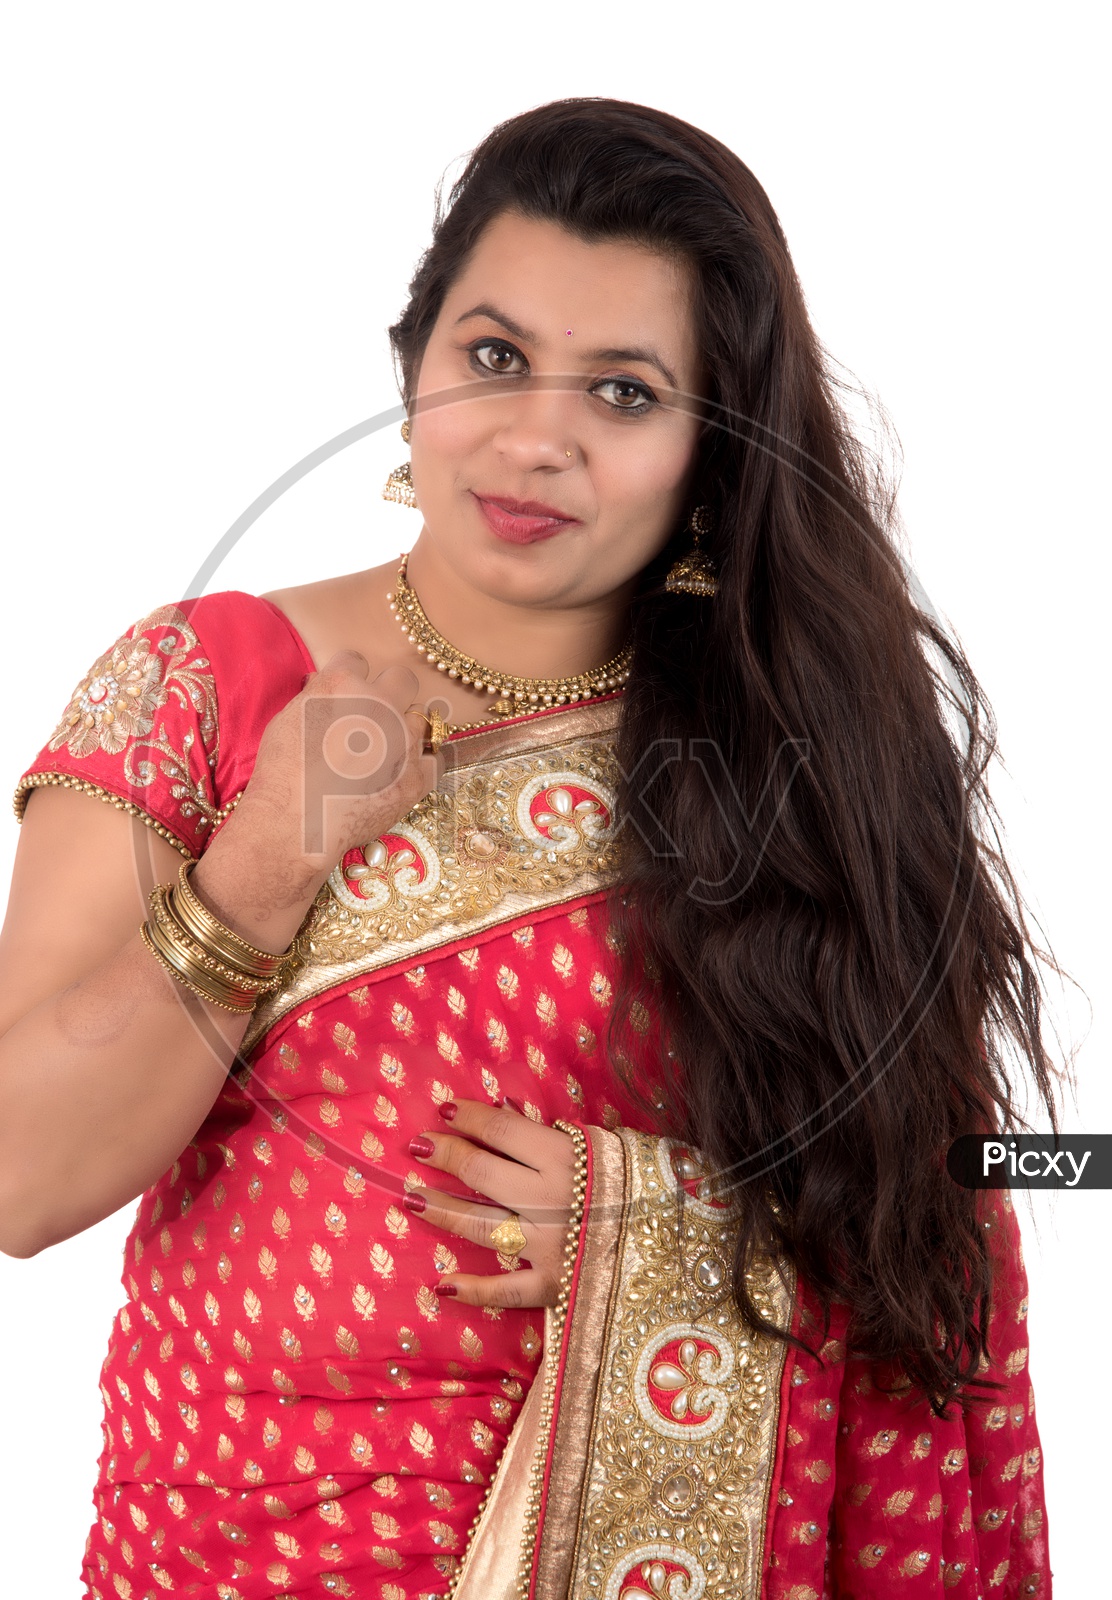 Posing Indian woman stock photo. Image of looking, fresh - 15869162